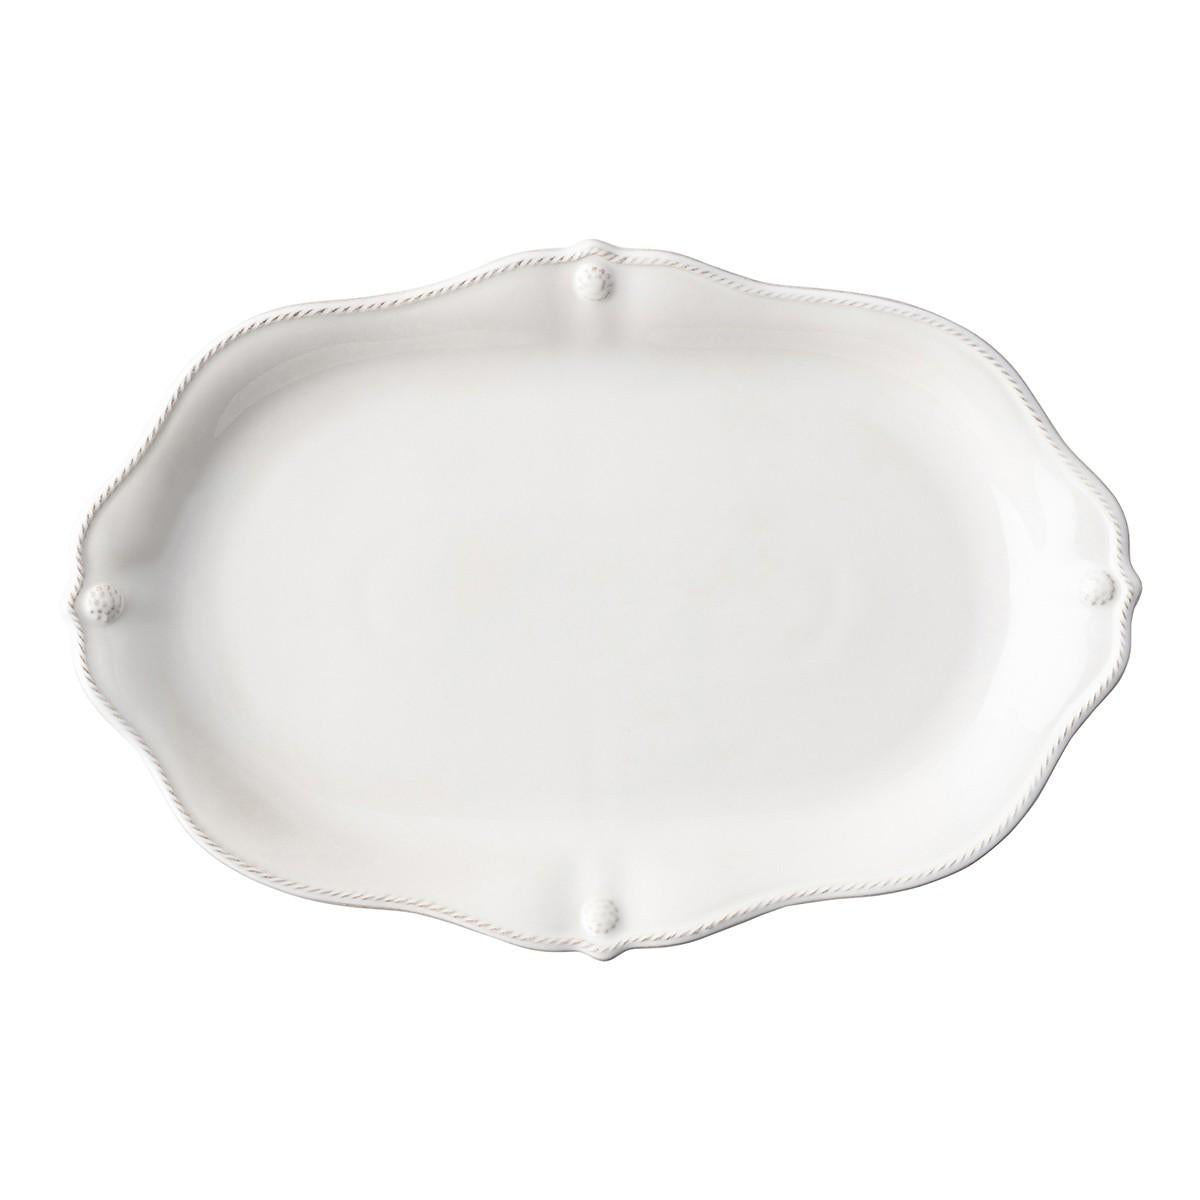 Berry & Thread 16" Oval Platter - Whitewash